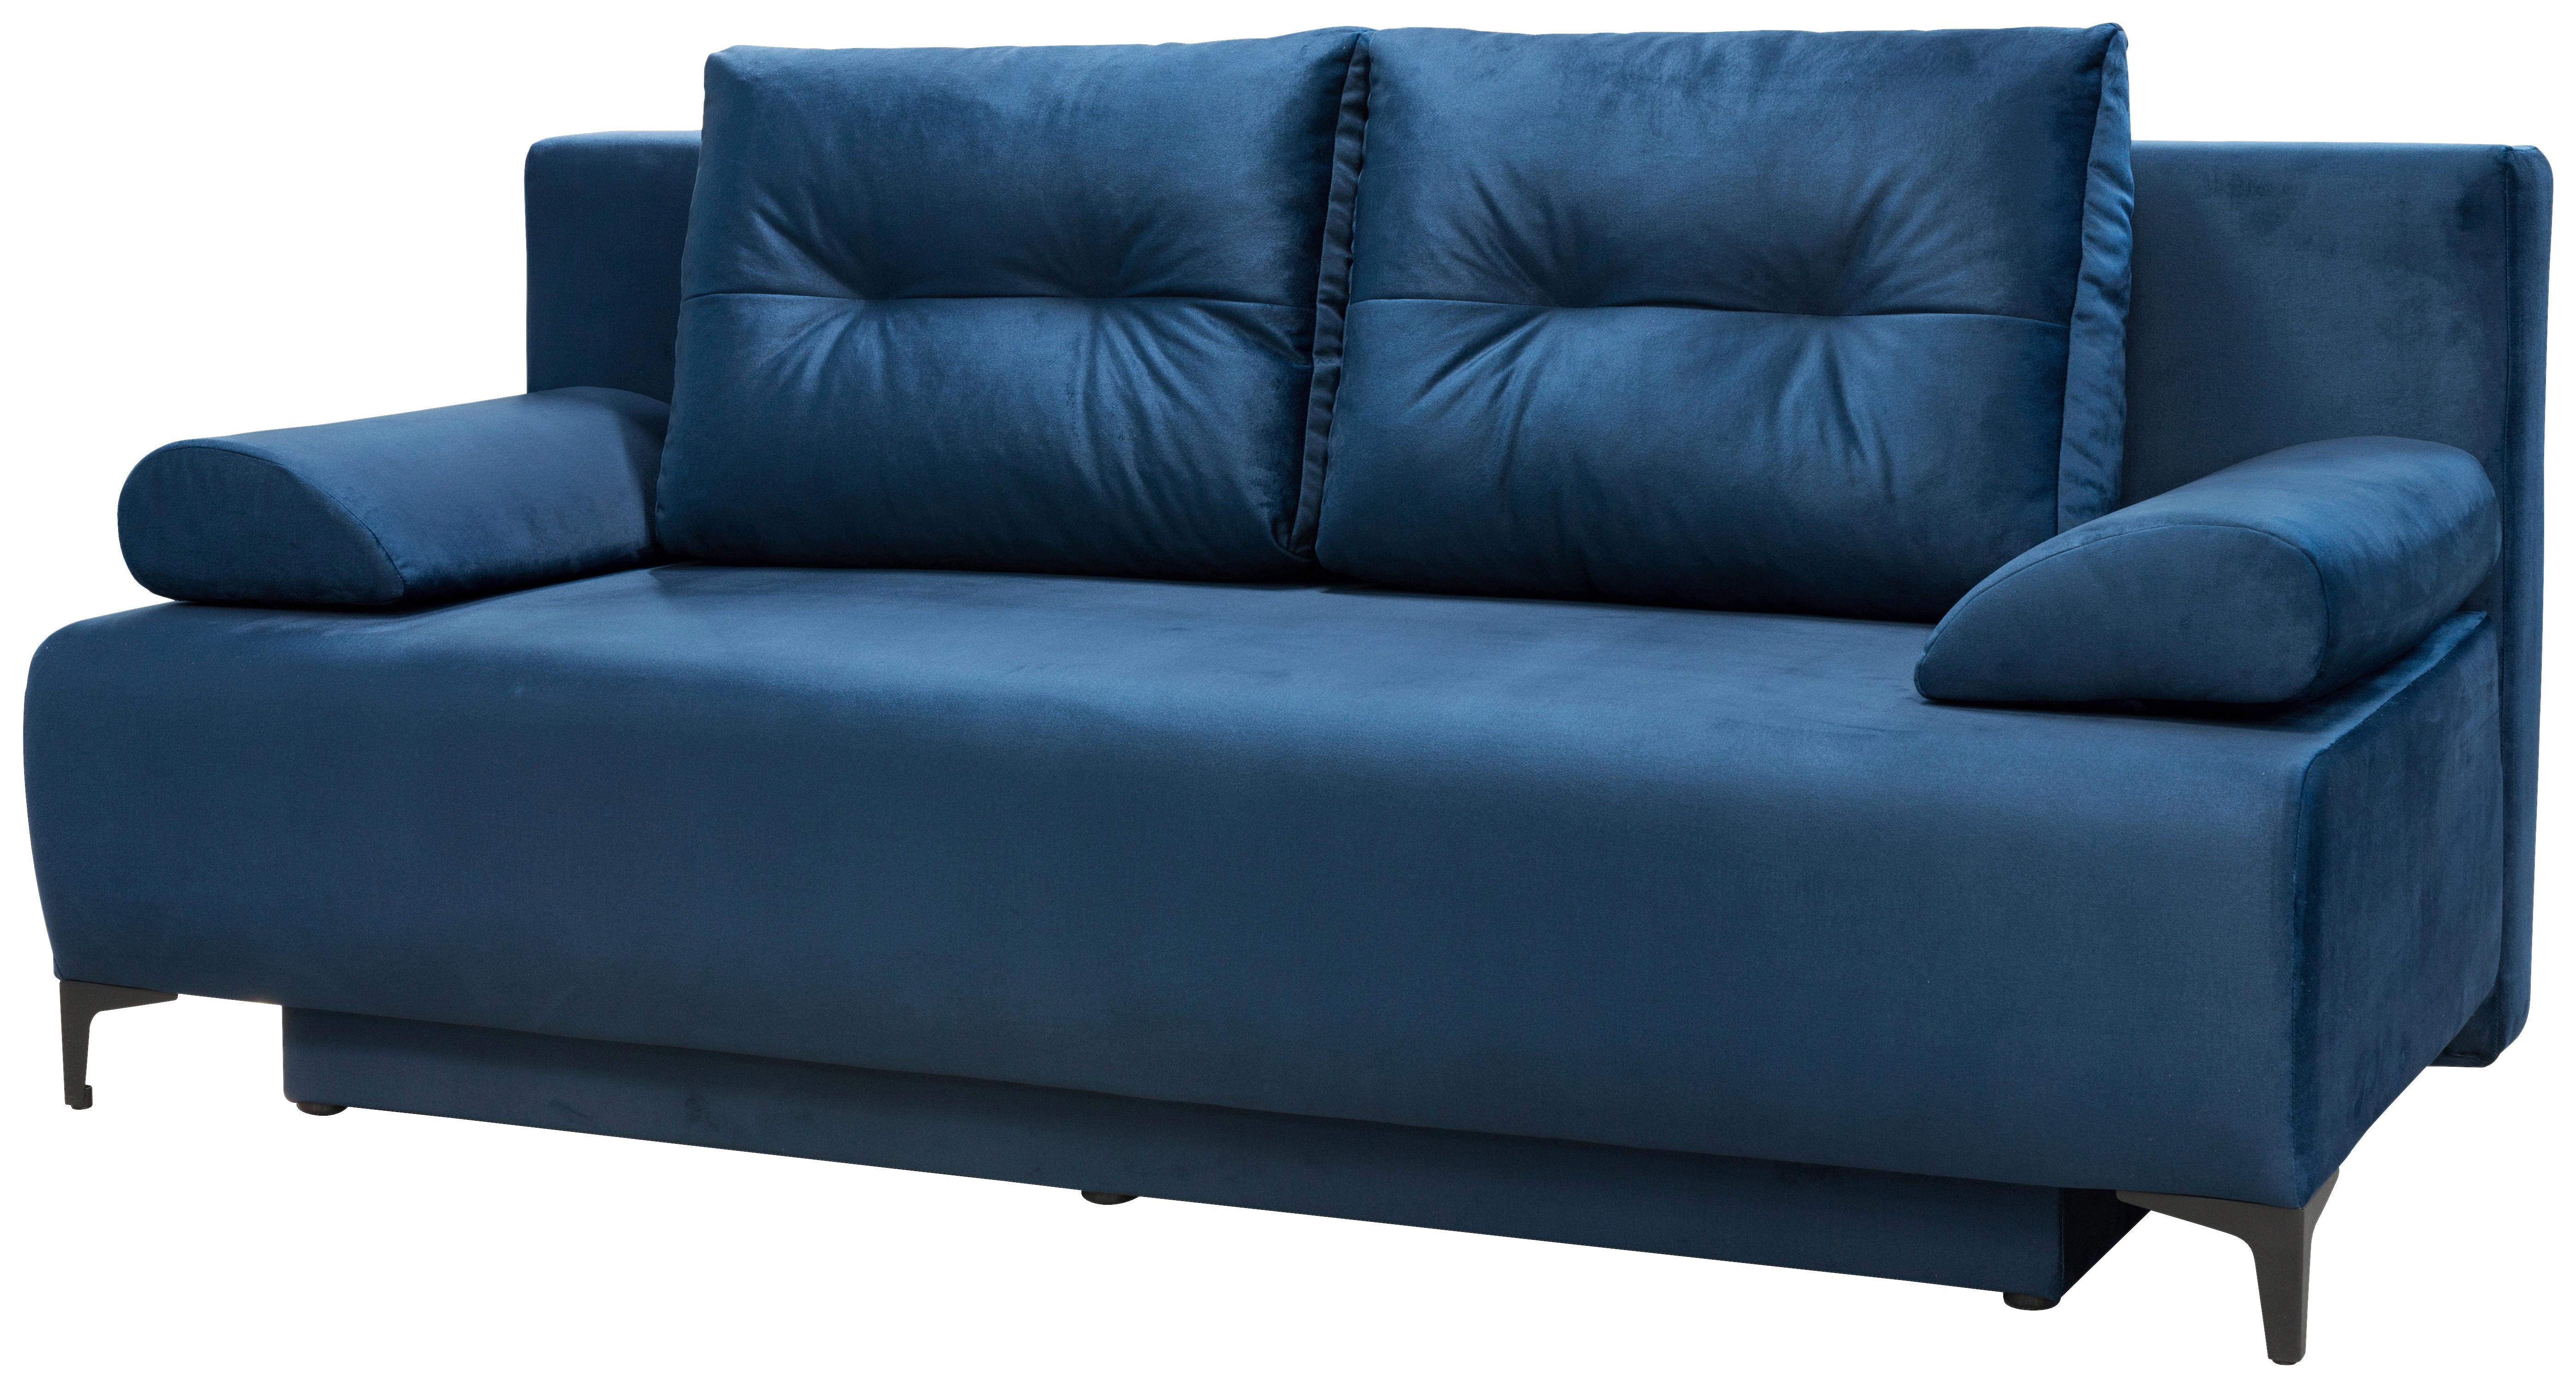 Sofa Viera - tamno plava/crna, Modern, tekstil/drvo (201/100/105cm) - Modern Living